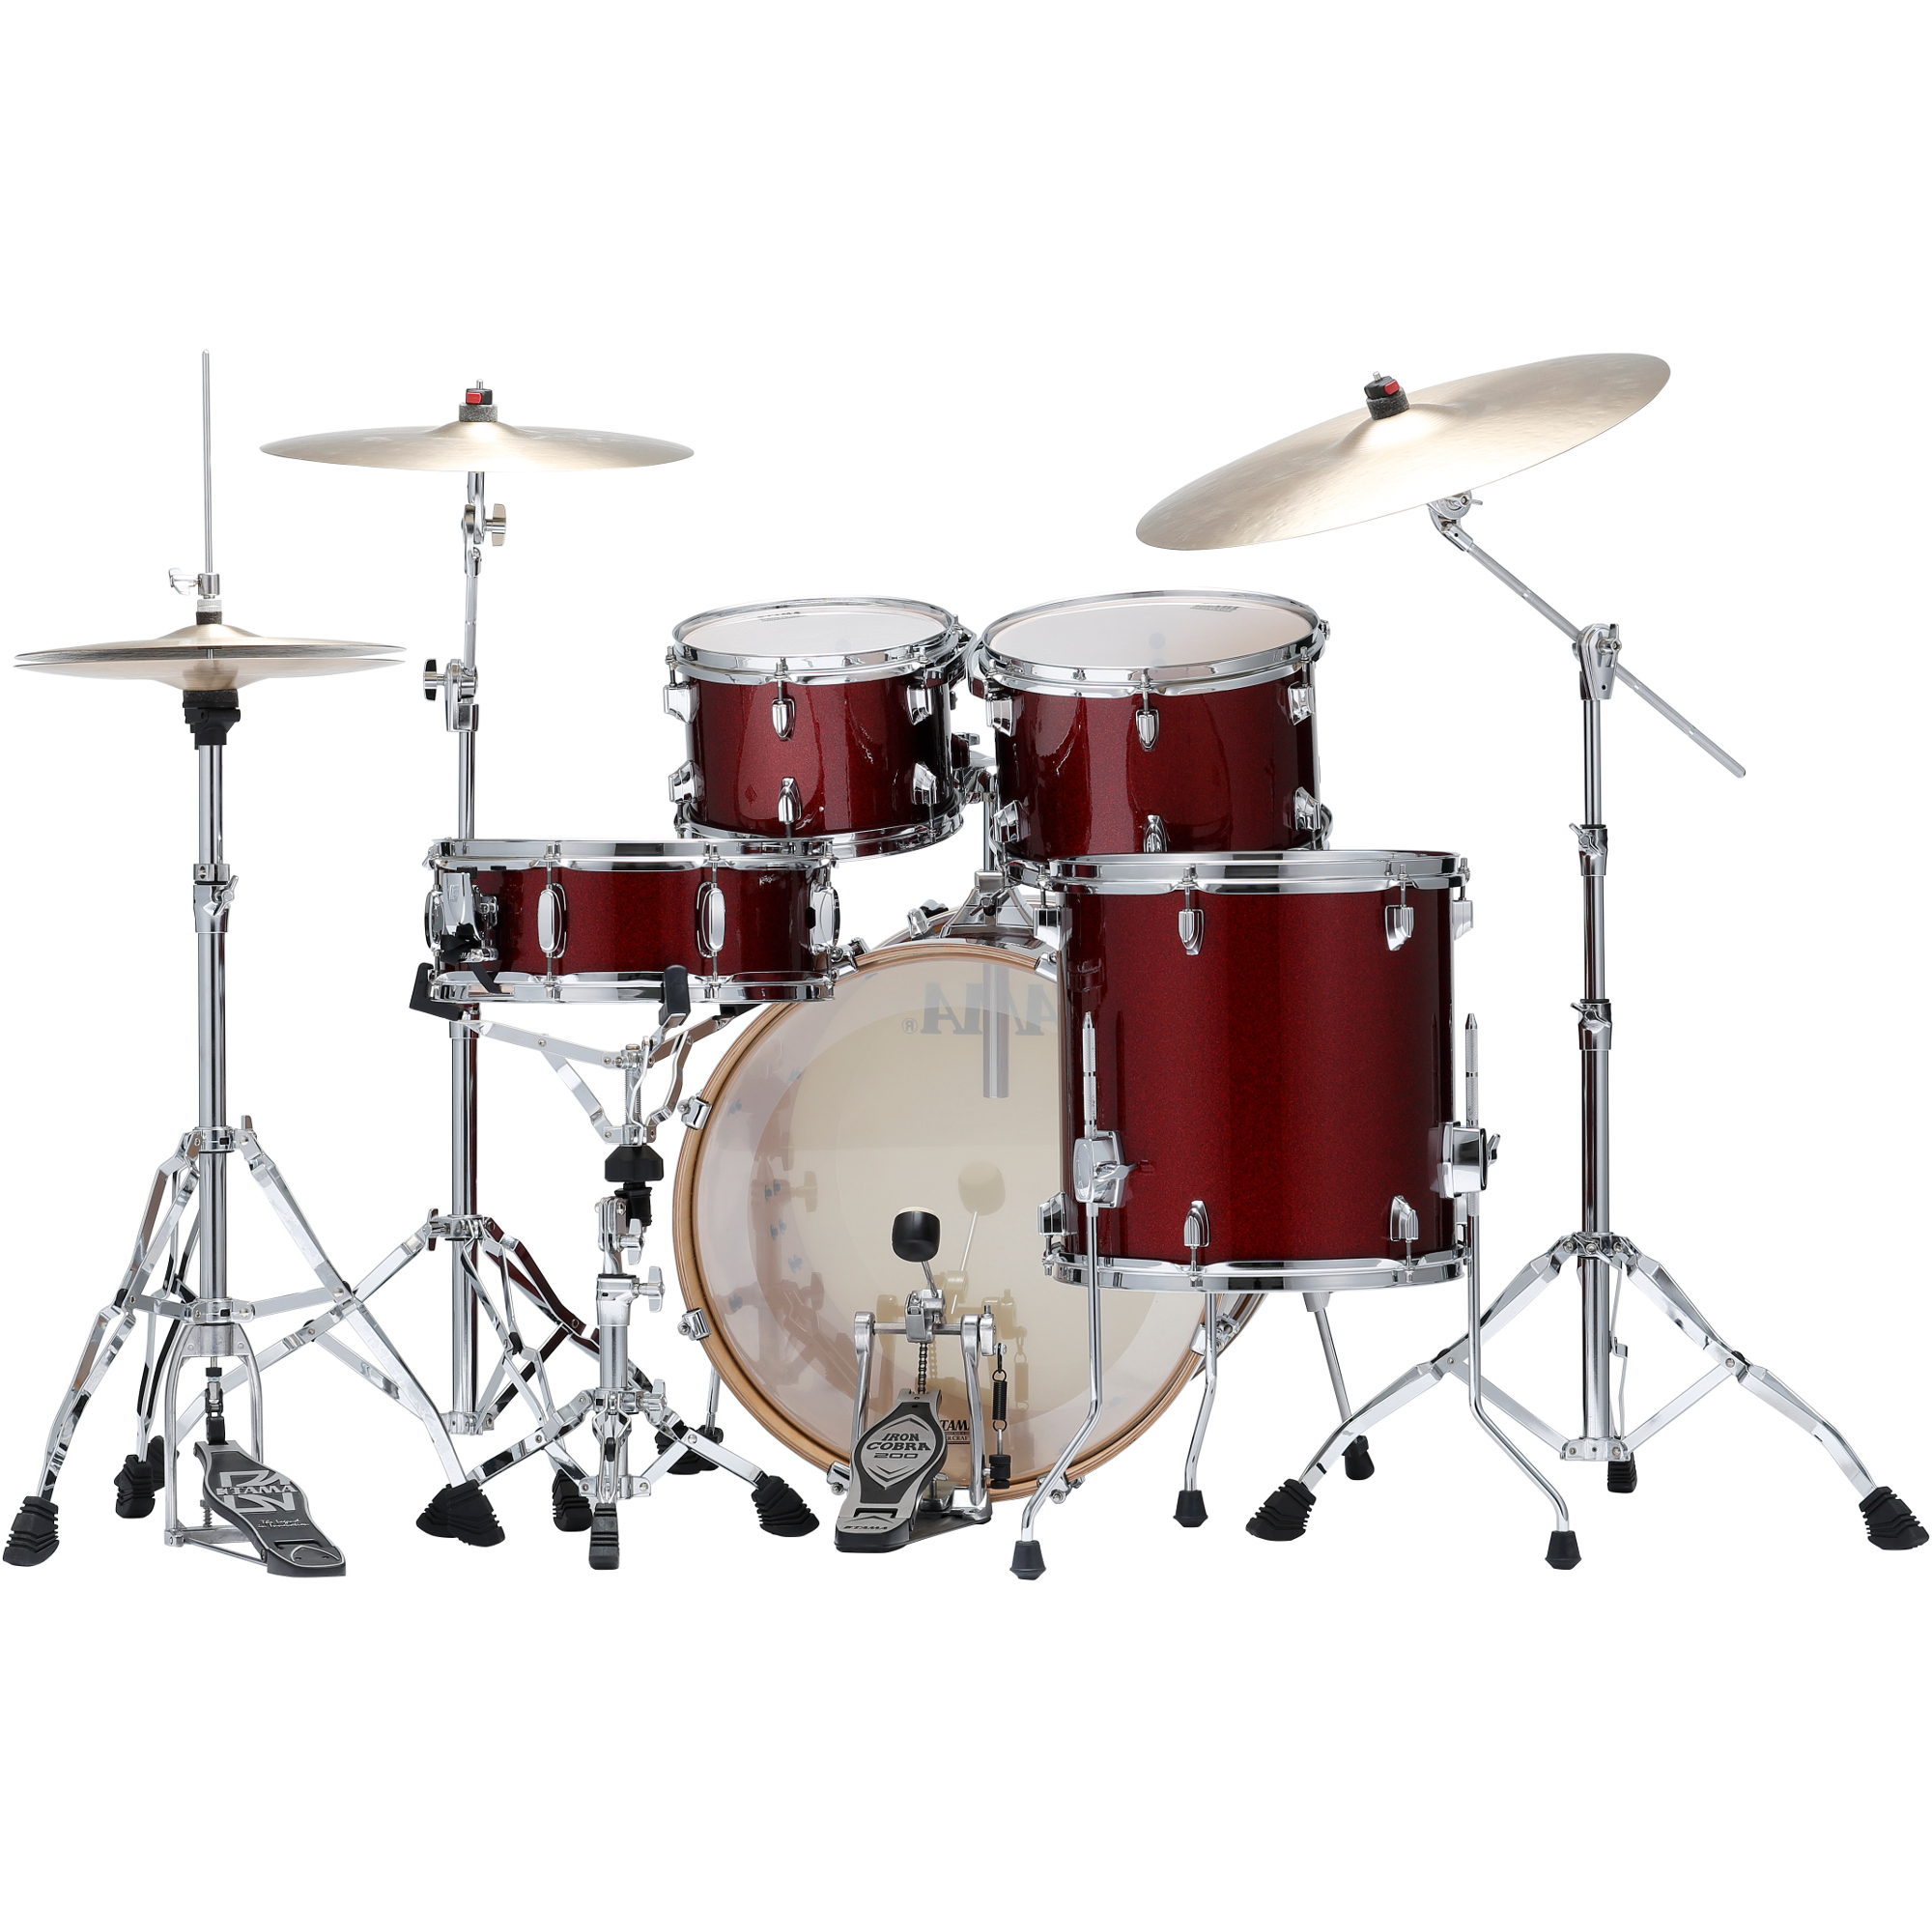 Tama Superstar Cl 5 Futs Shell Kit - 5 FÛts - Dark Red Sparkle - Standard Akustik Schlagzeug - Variation 1